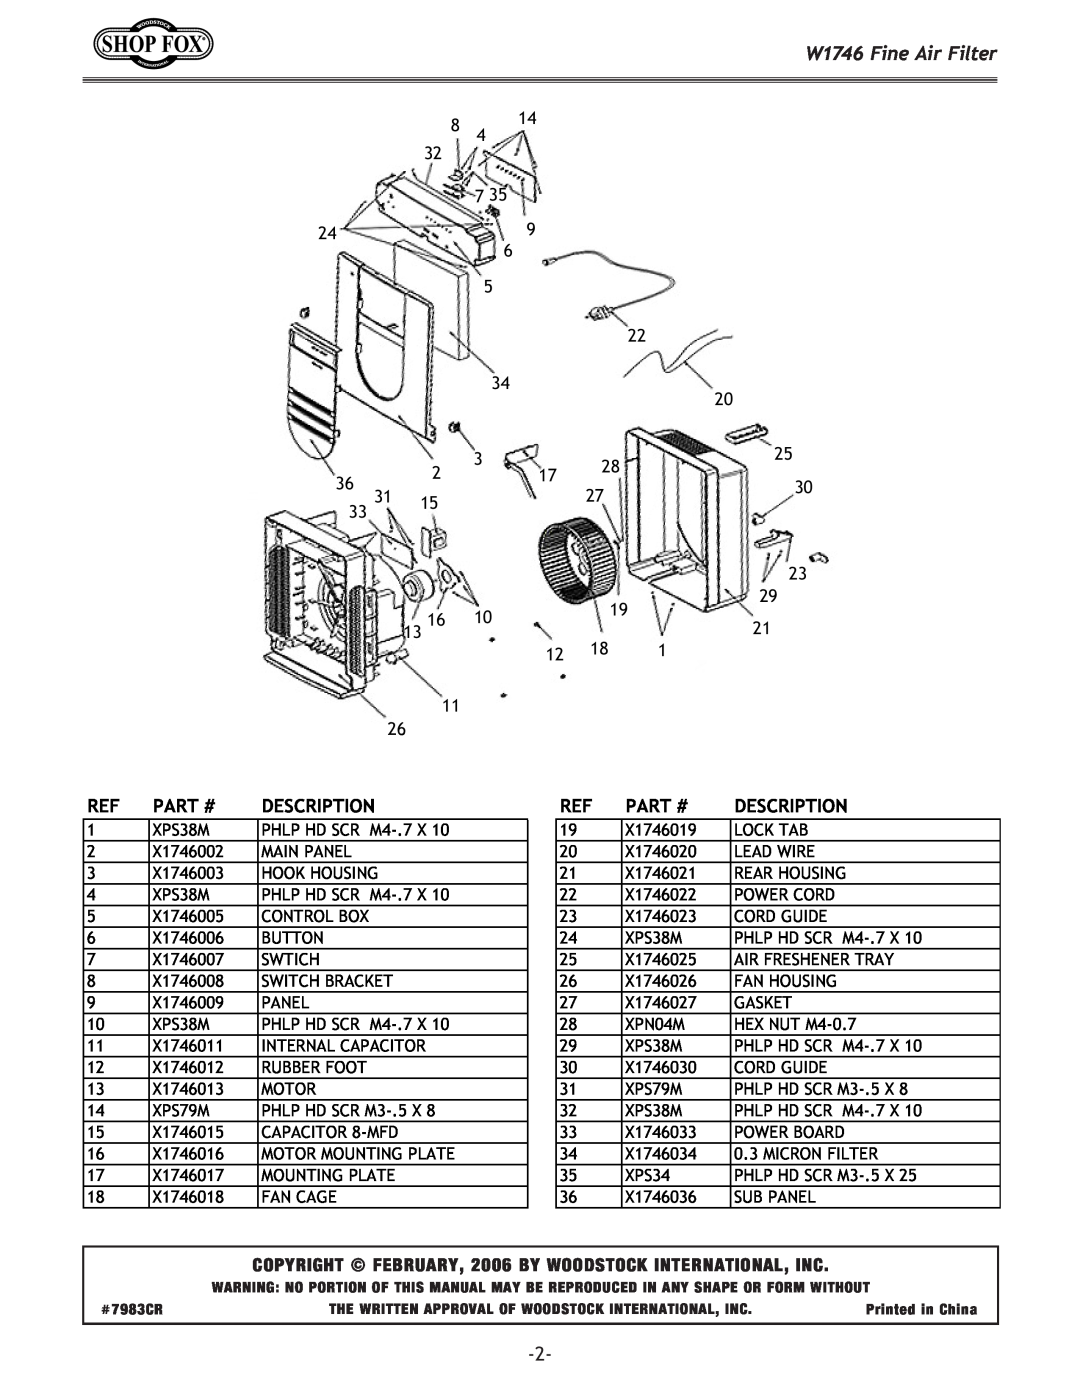 Woodstock instruction sheet W1746 Fine Air Filter, Part#, Description 